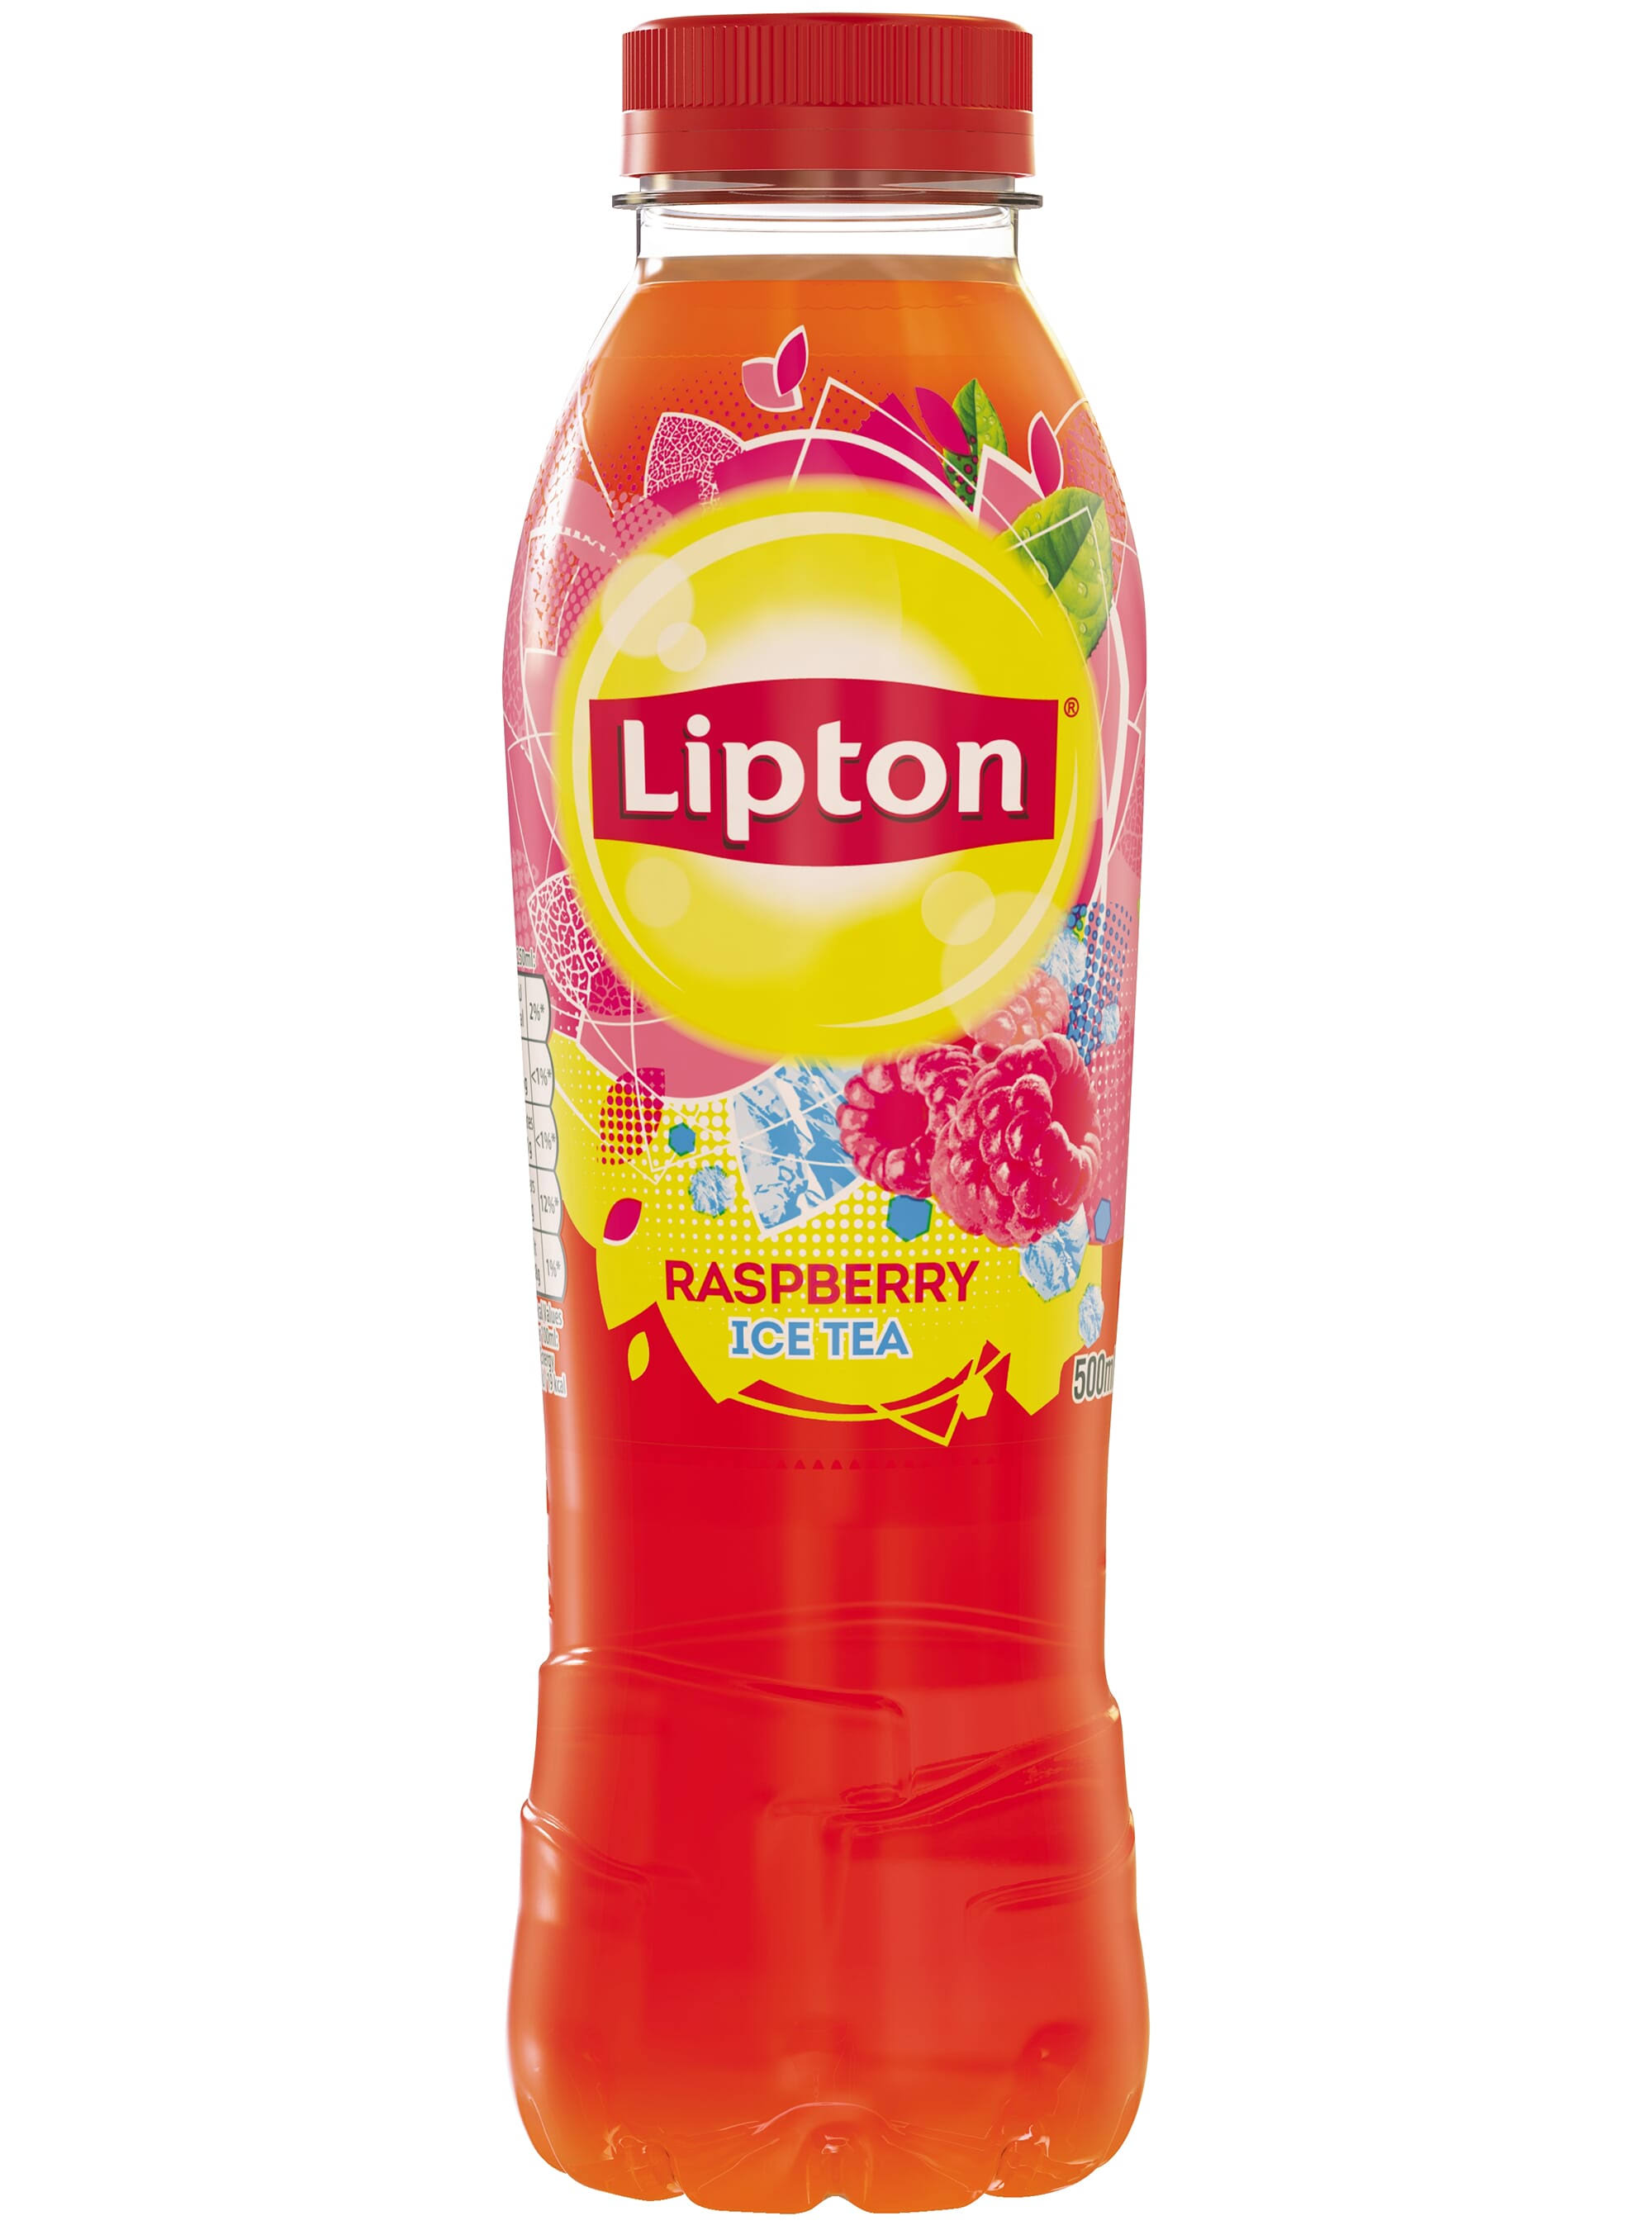 Lipton Raspberry Ice Tea - 12x500ml